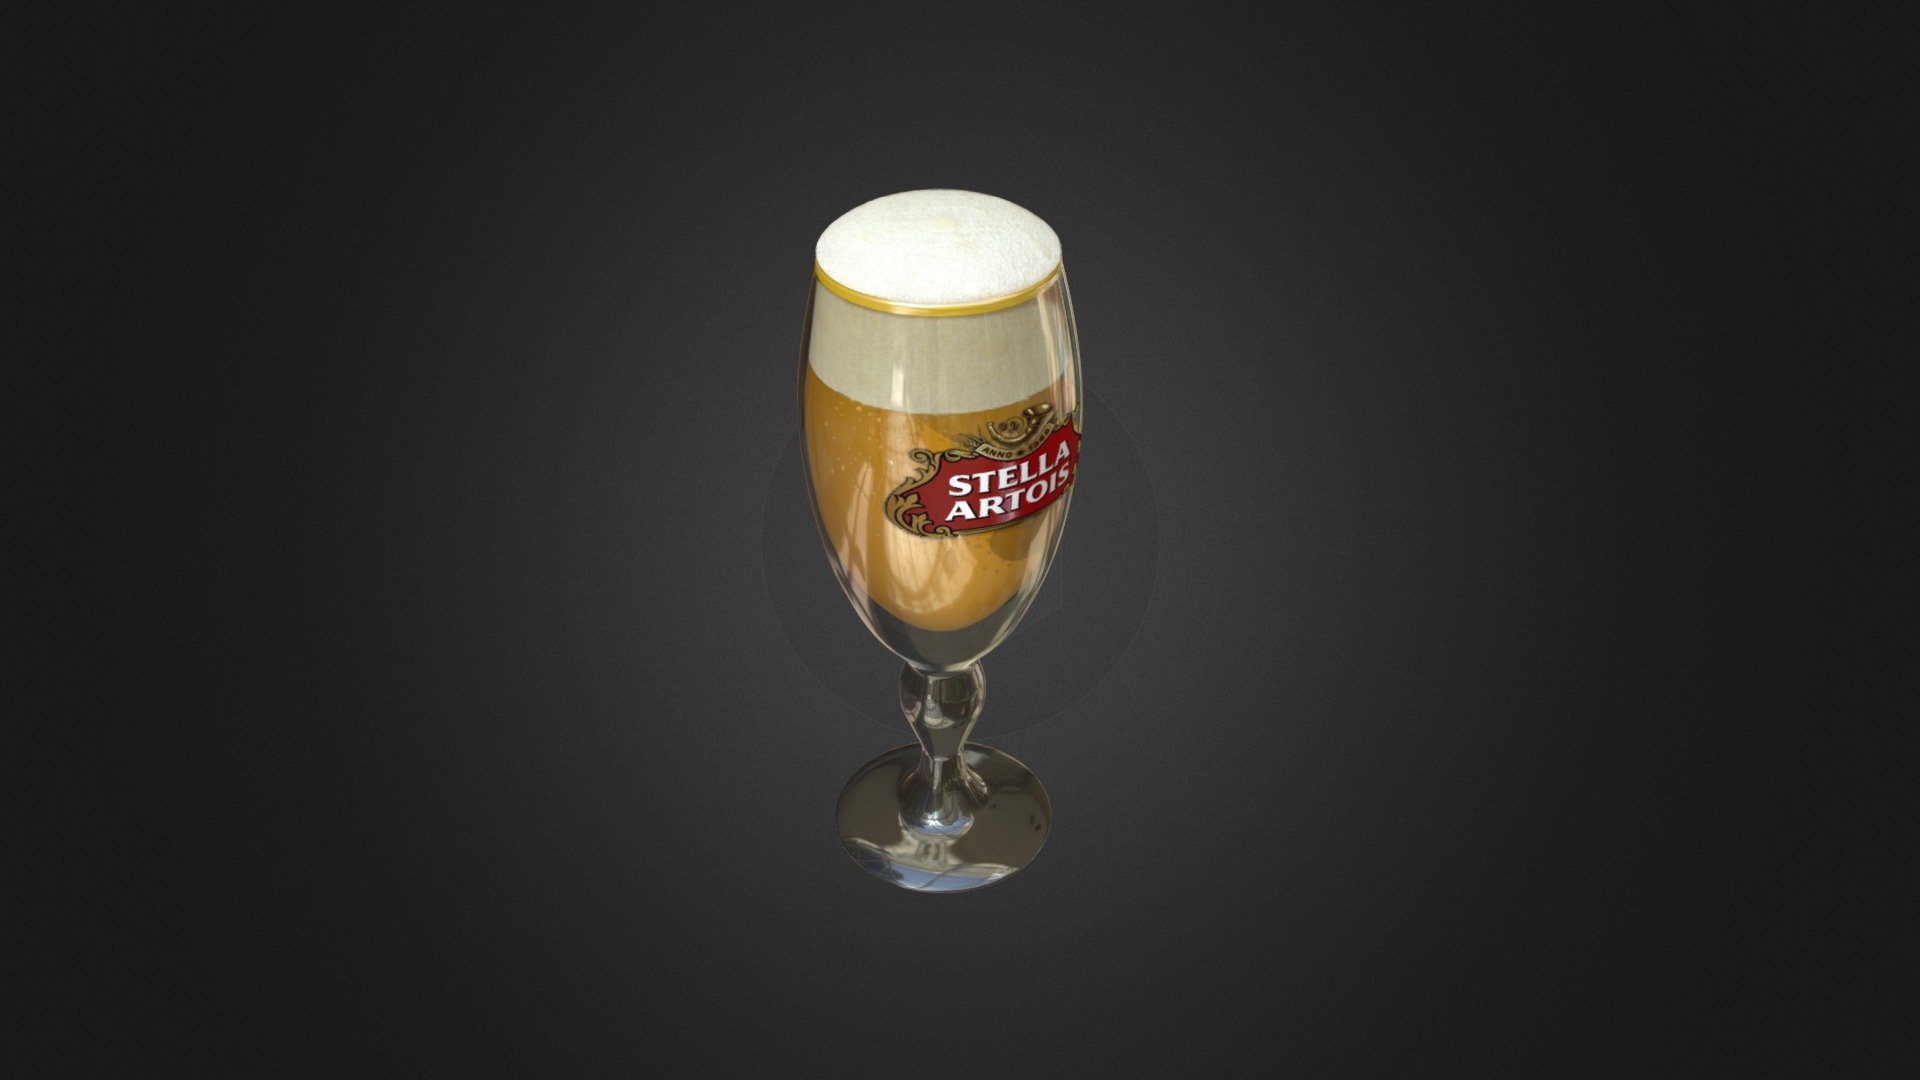 Cerveza Stella Artois
Caliz - Stella Artois - 3D model by Quimera Restaurante (@quimera) 3d model